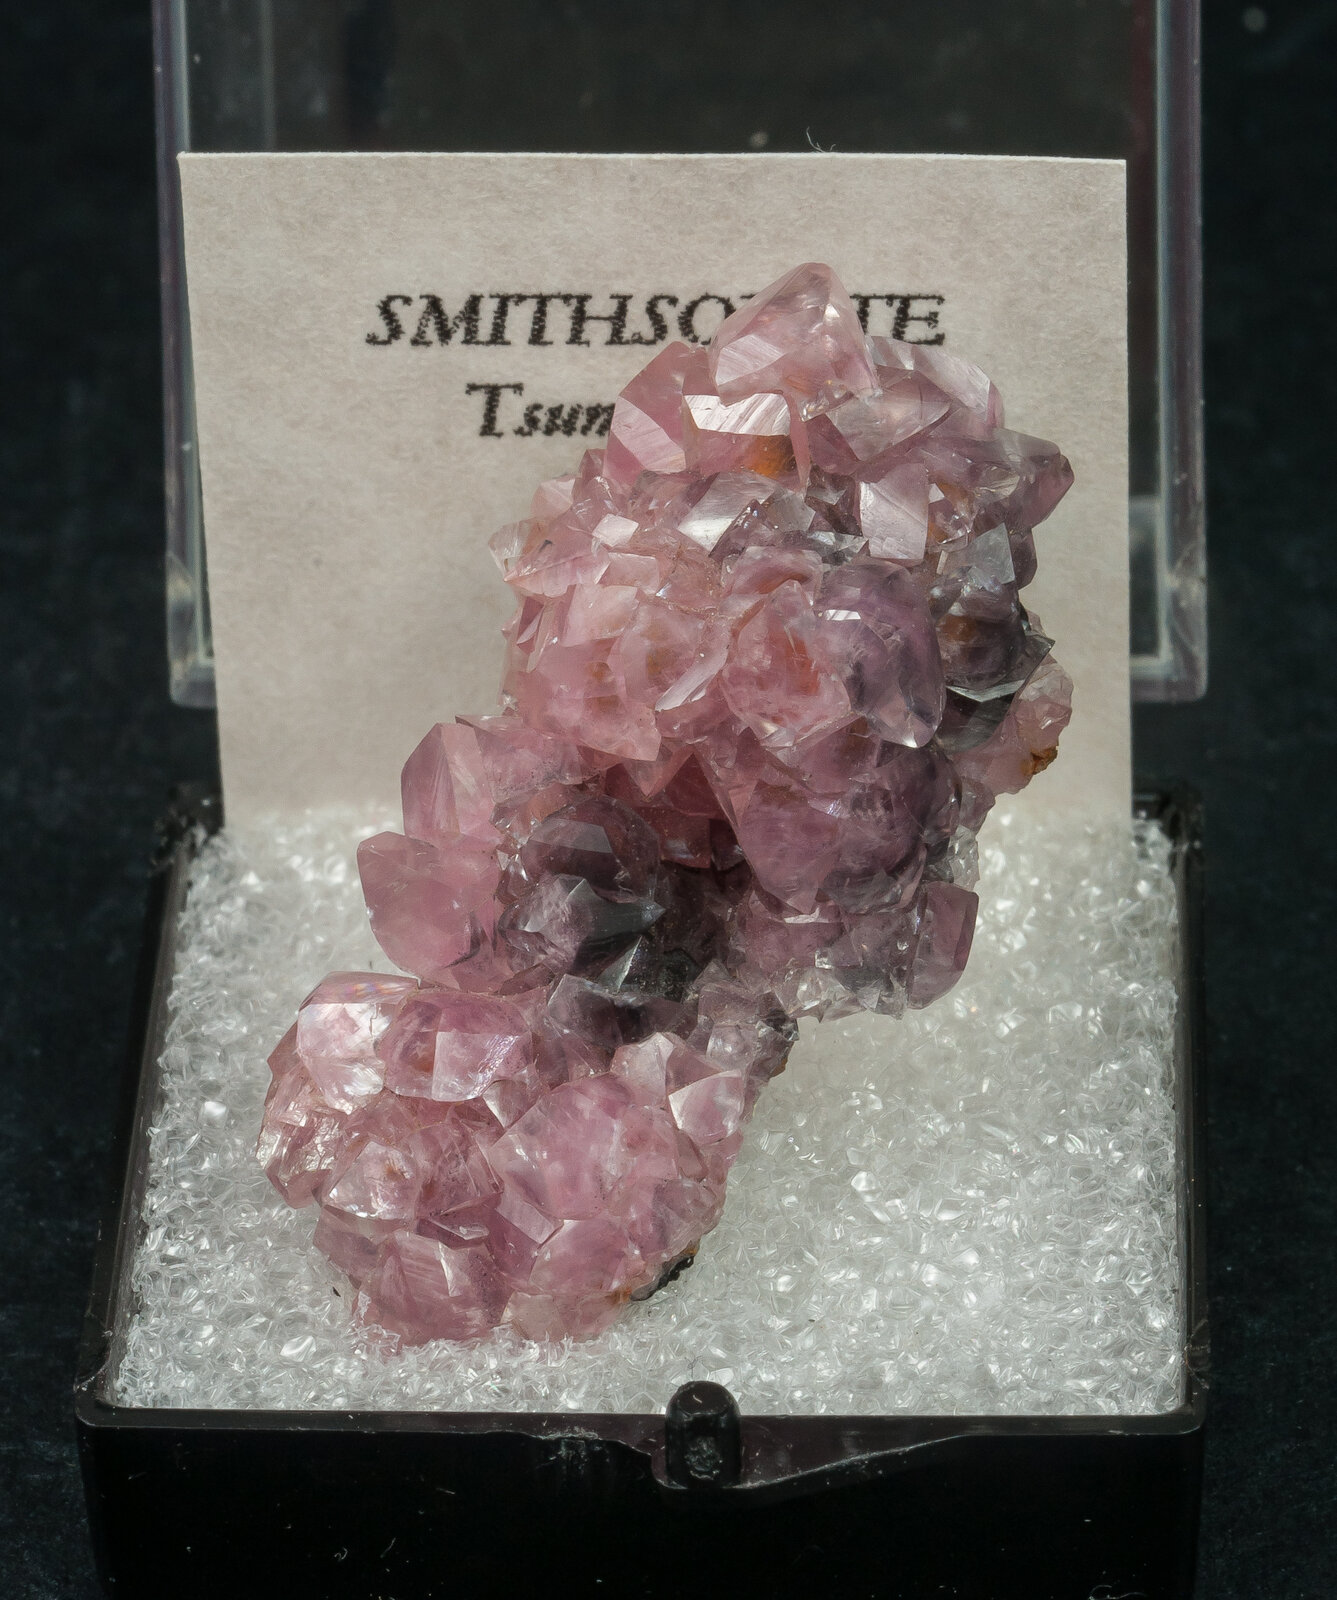 specimens/s_imagesAN5/Smithsonite-TMG87AN5f1.jpg